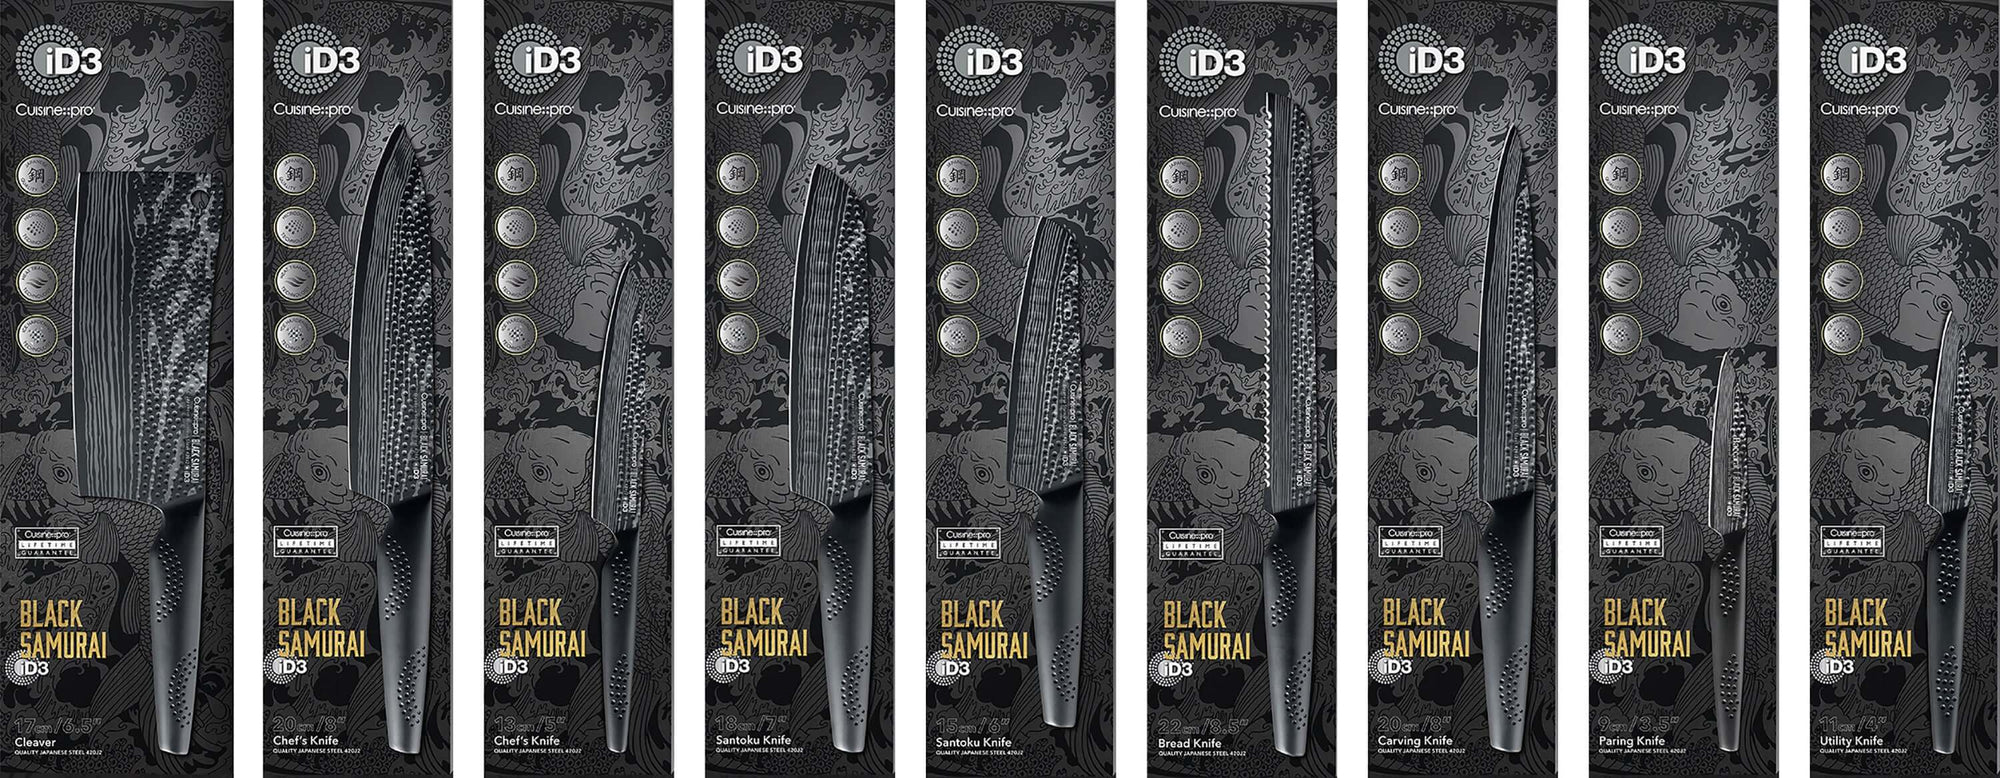 iD3® Black Samurai™ Packaging